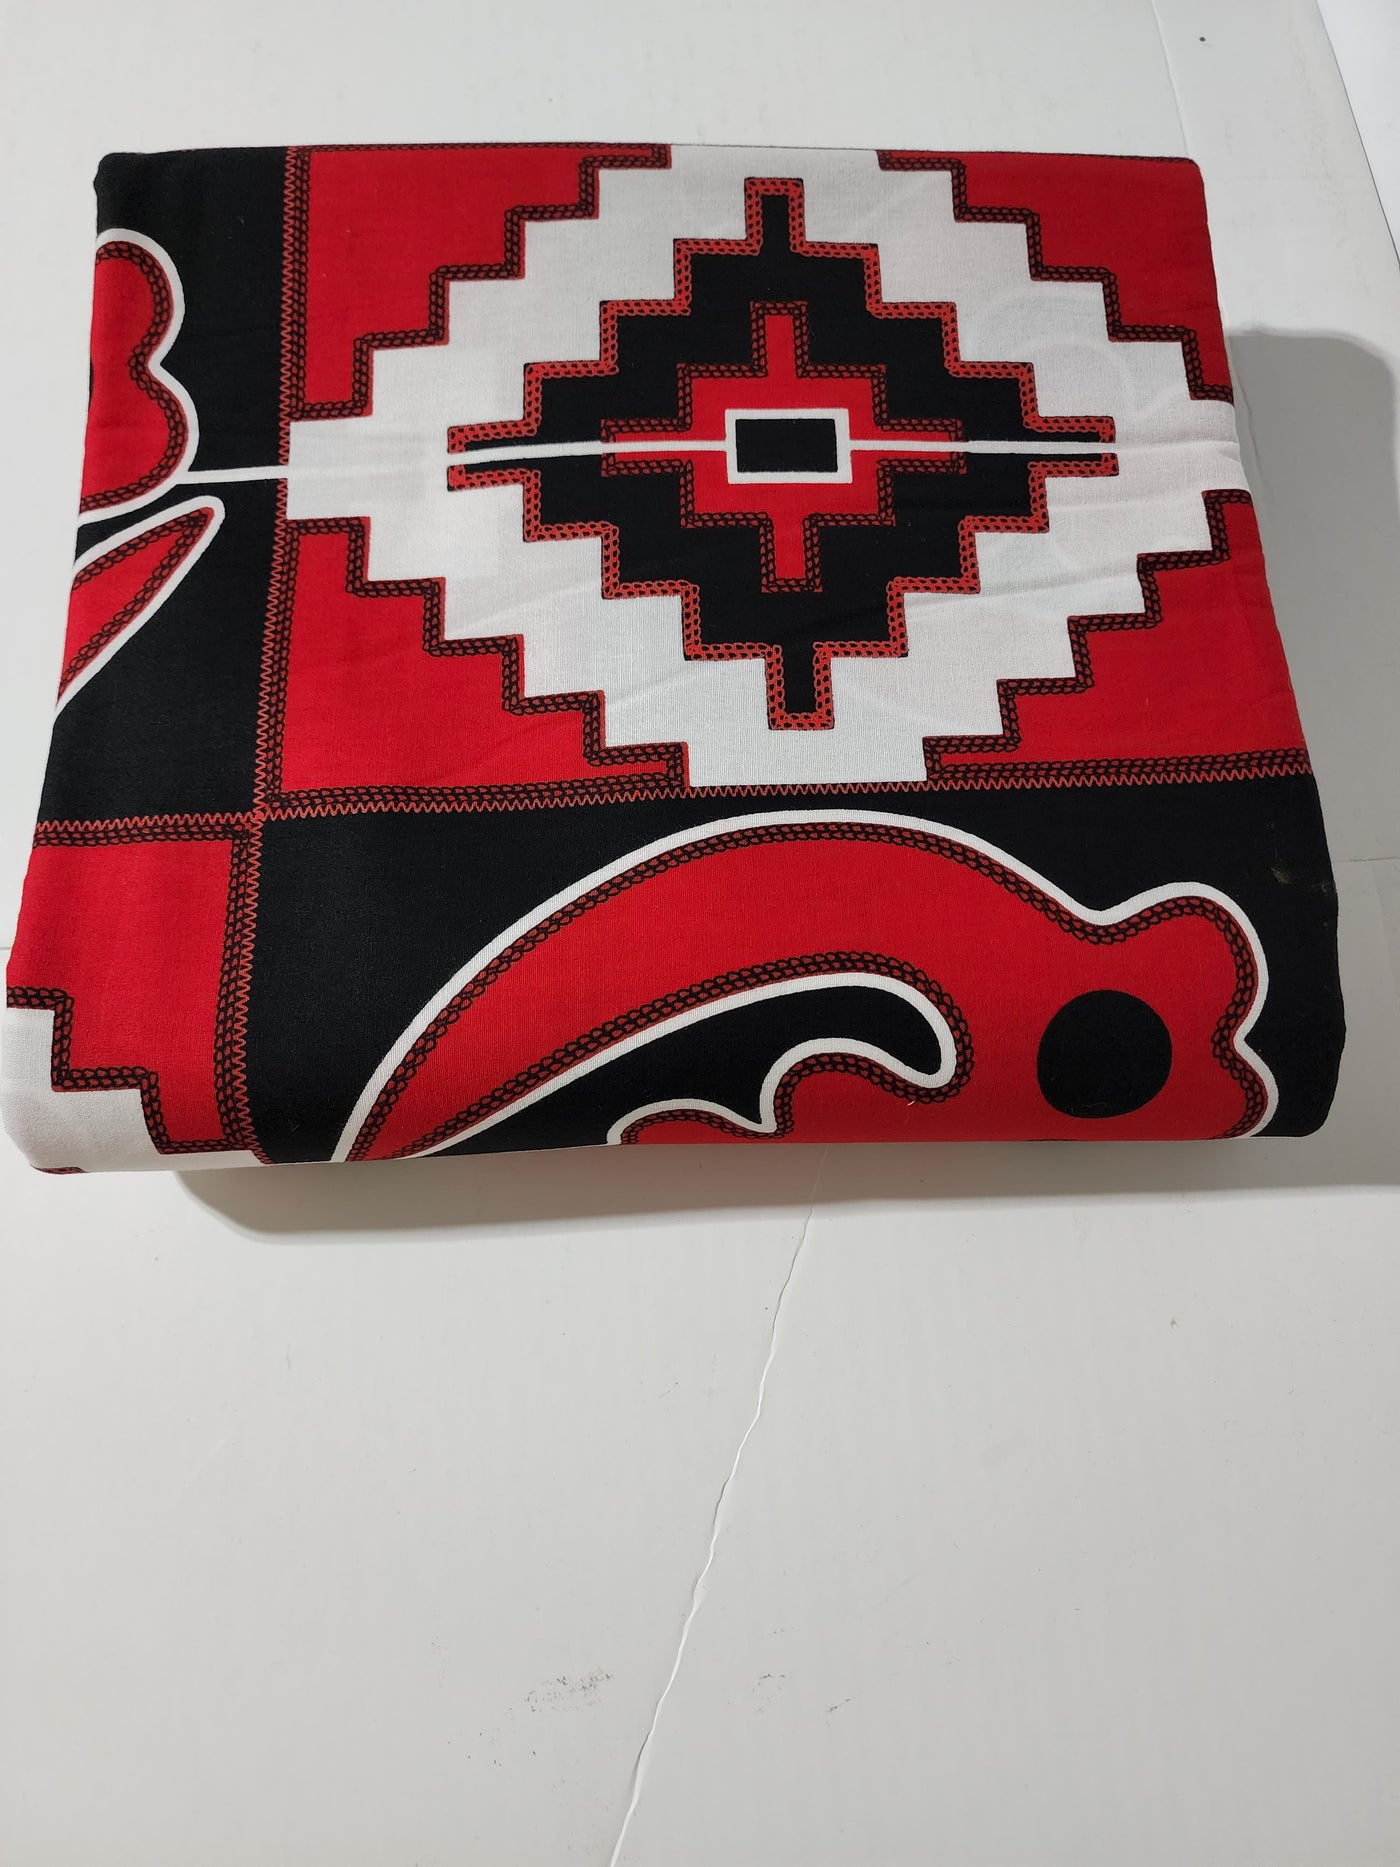 Red and White Tribal Ankara Fabric, ACS0325